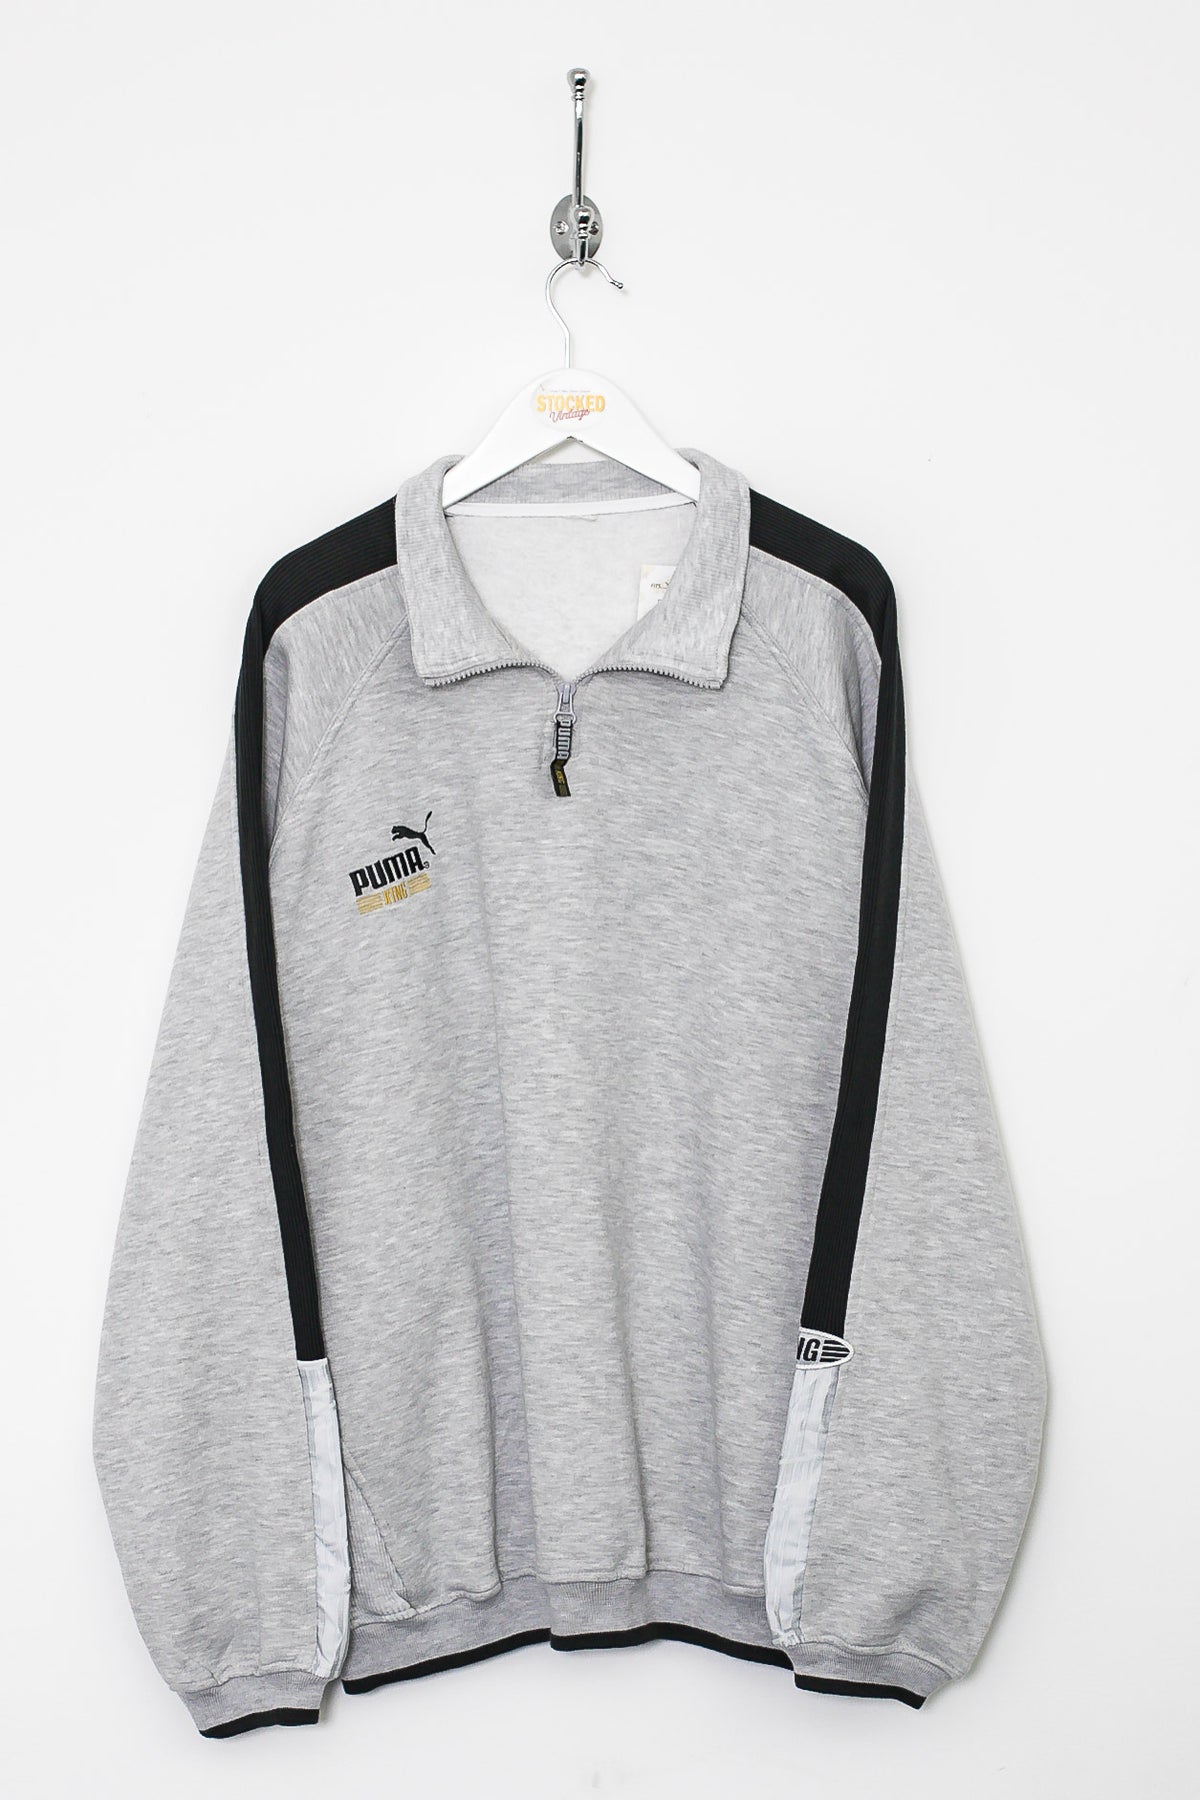 90s Puma King 1/4 Zip Sweatshirt (XL)